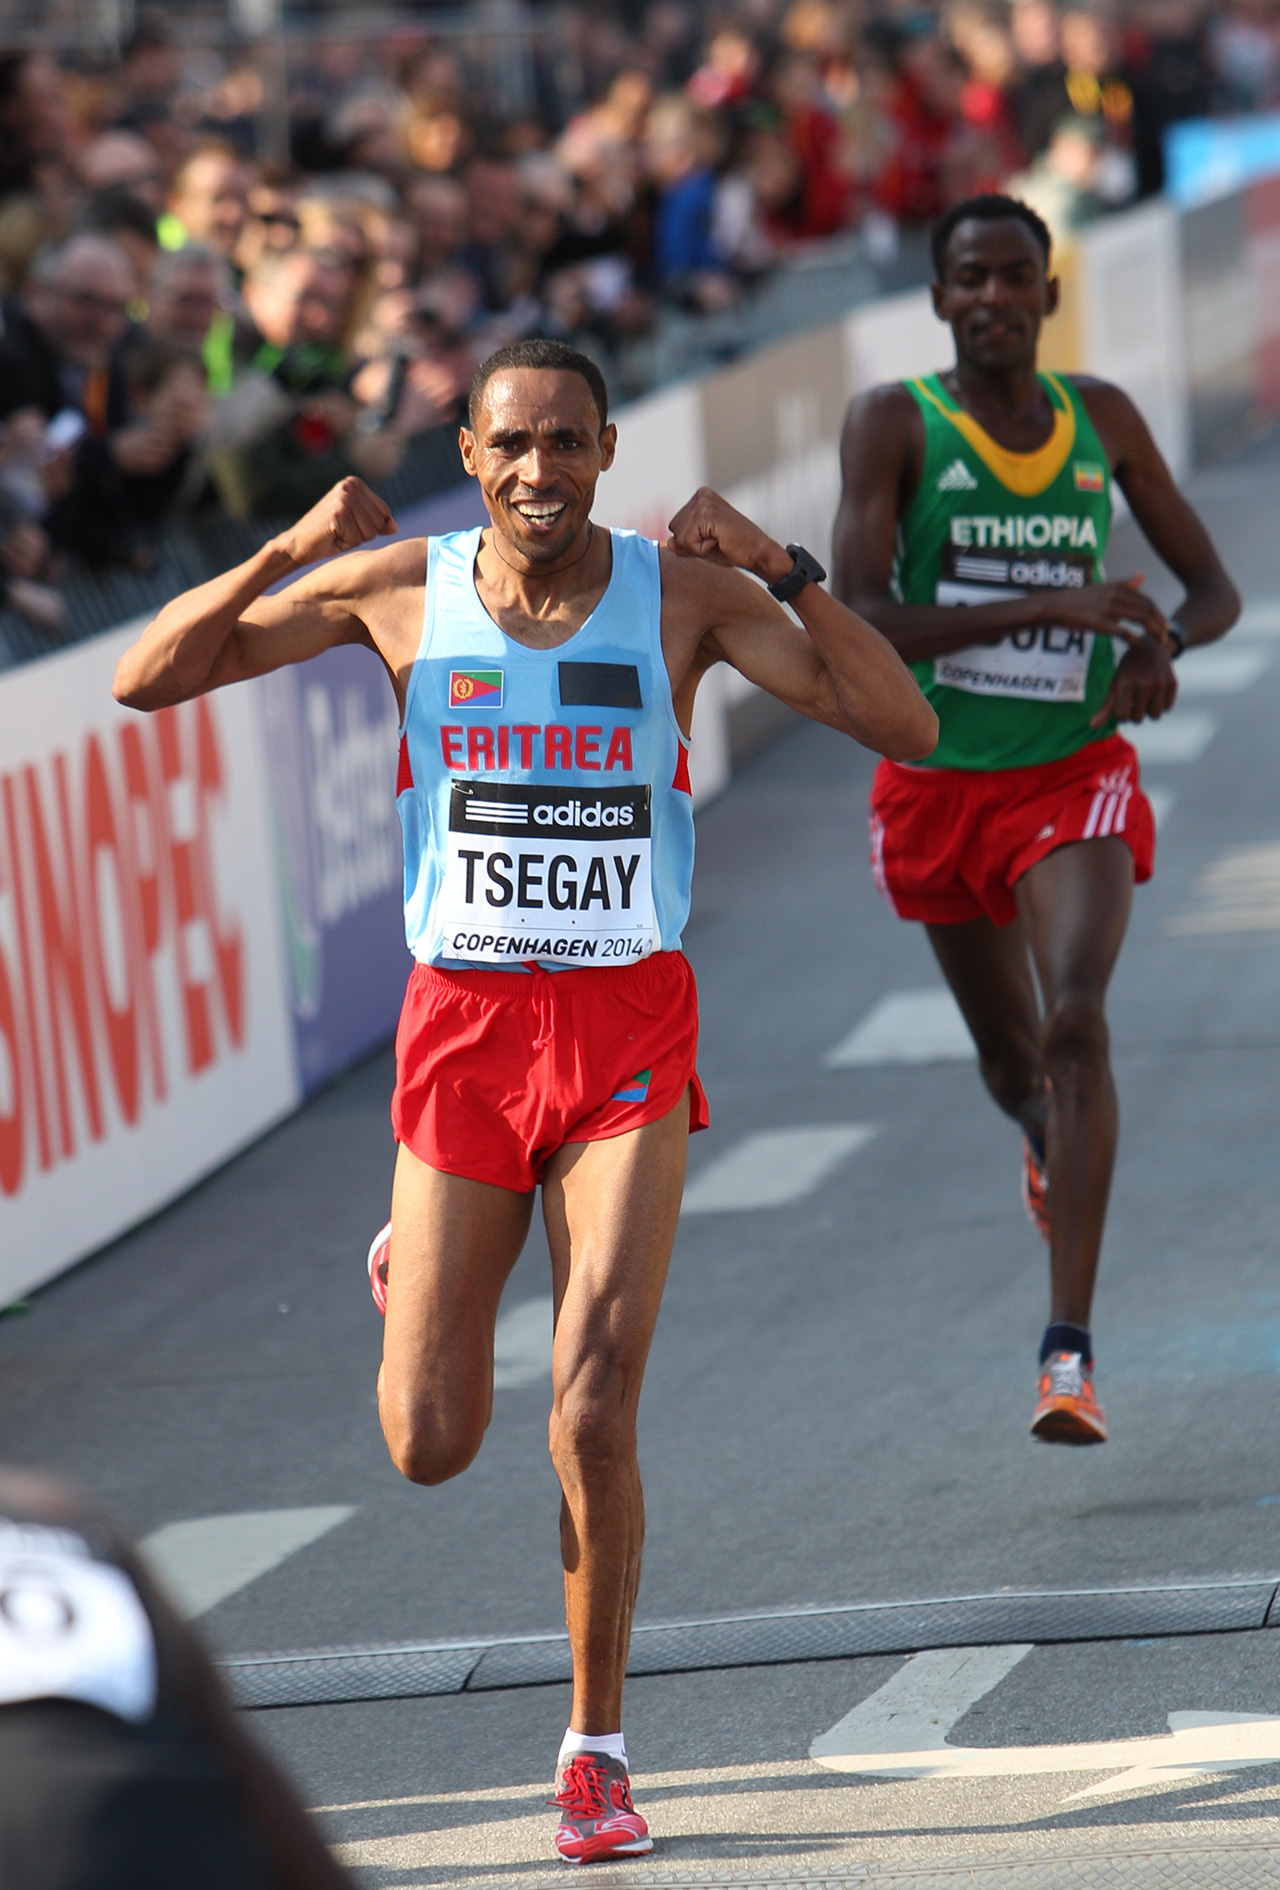 Samuel-Tsegay-VM-halvmaraton-Koebenhavn-2014-foto-Kjell Vigestad.jpg